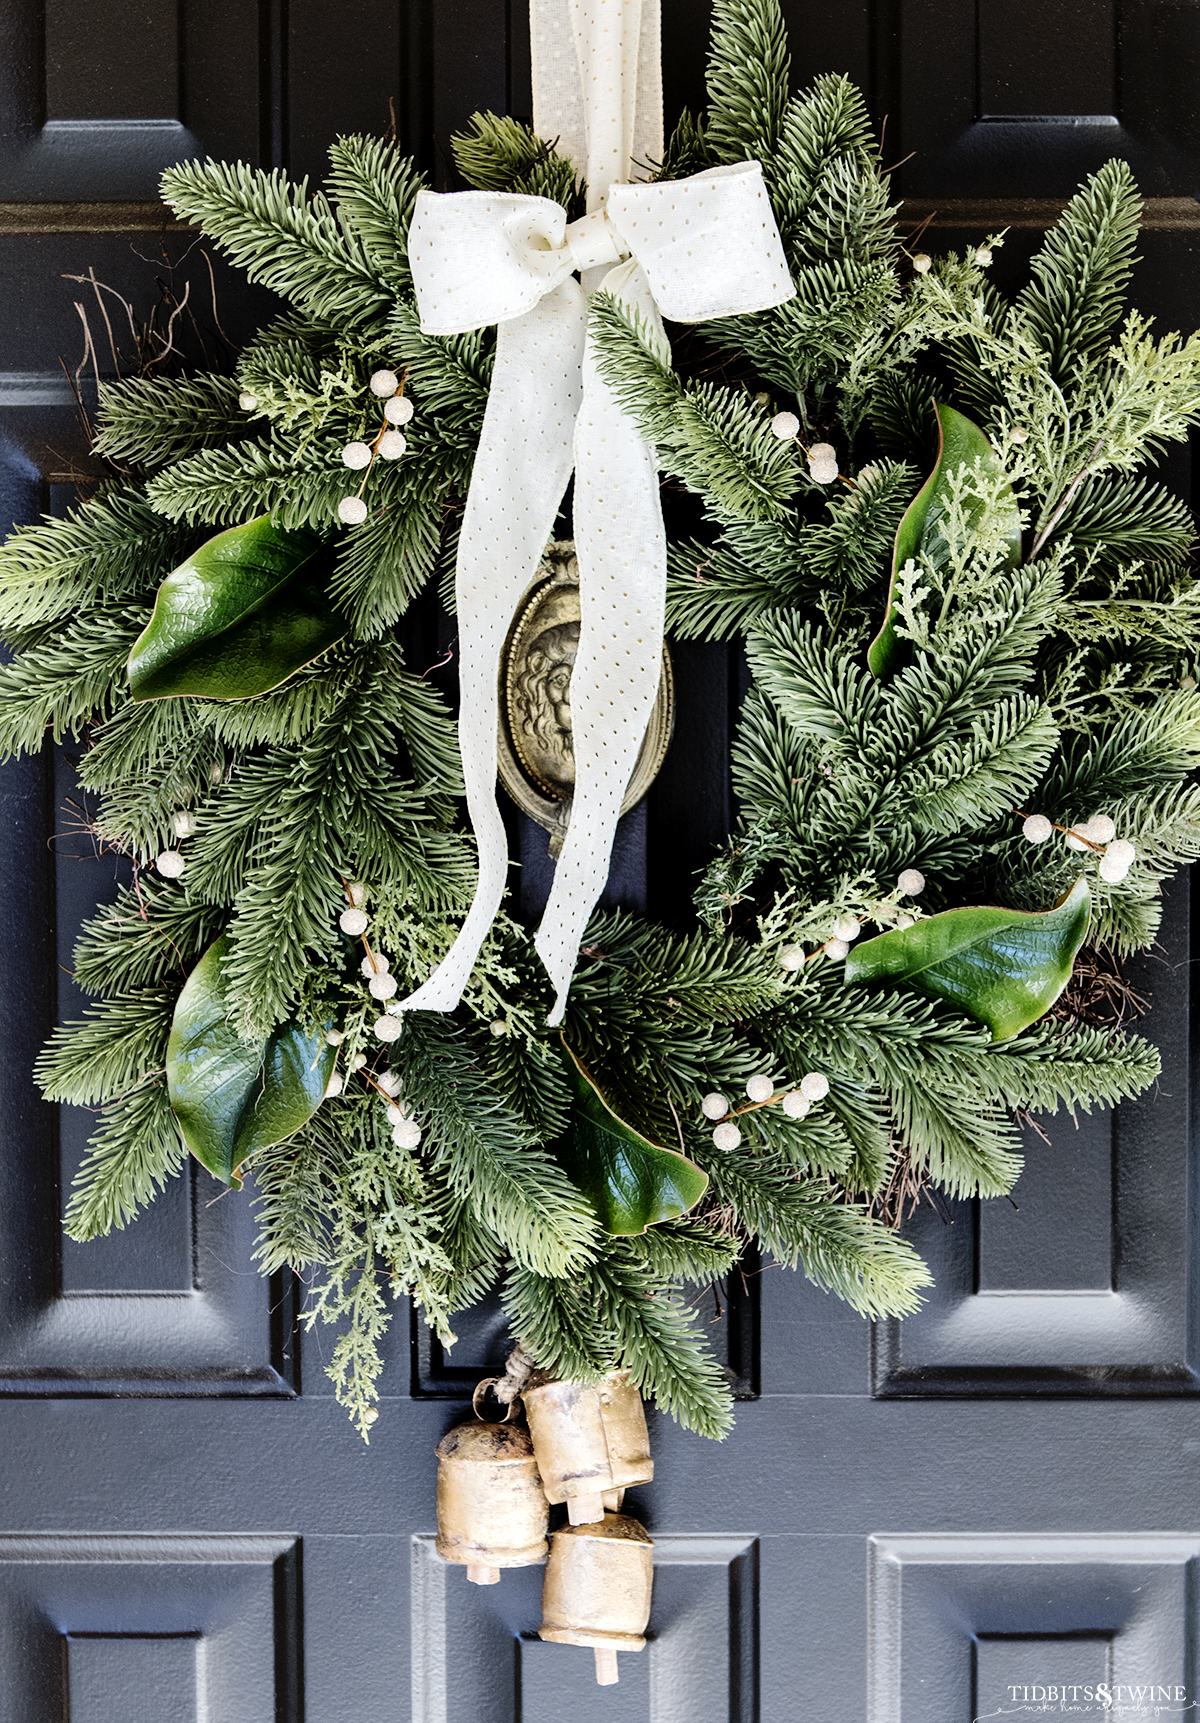 black front door with brass lion door knocker and green christmas wreath on door with a polka dot bow